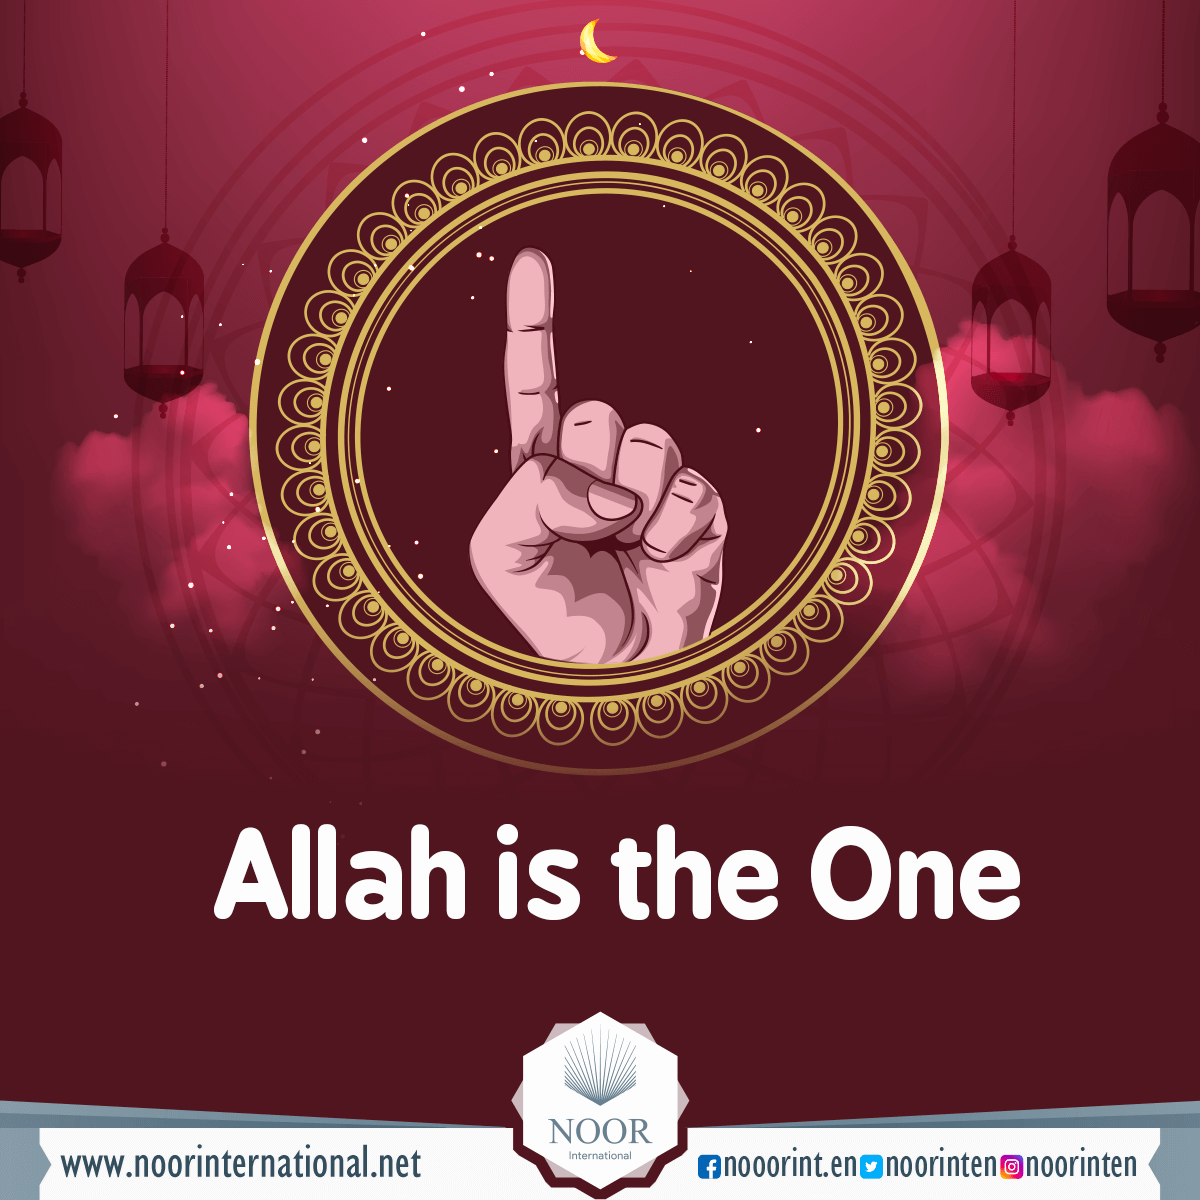 Allah introduces himself